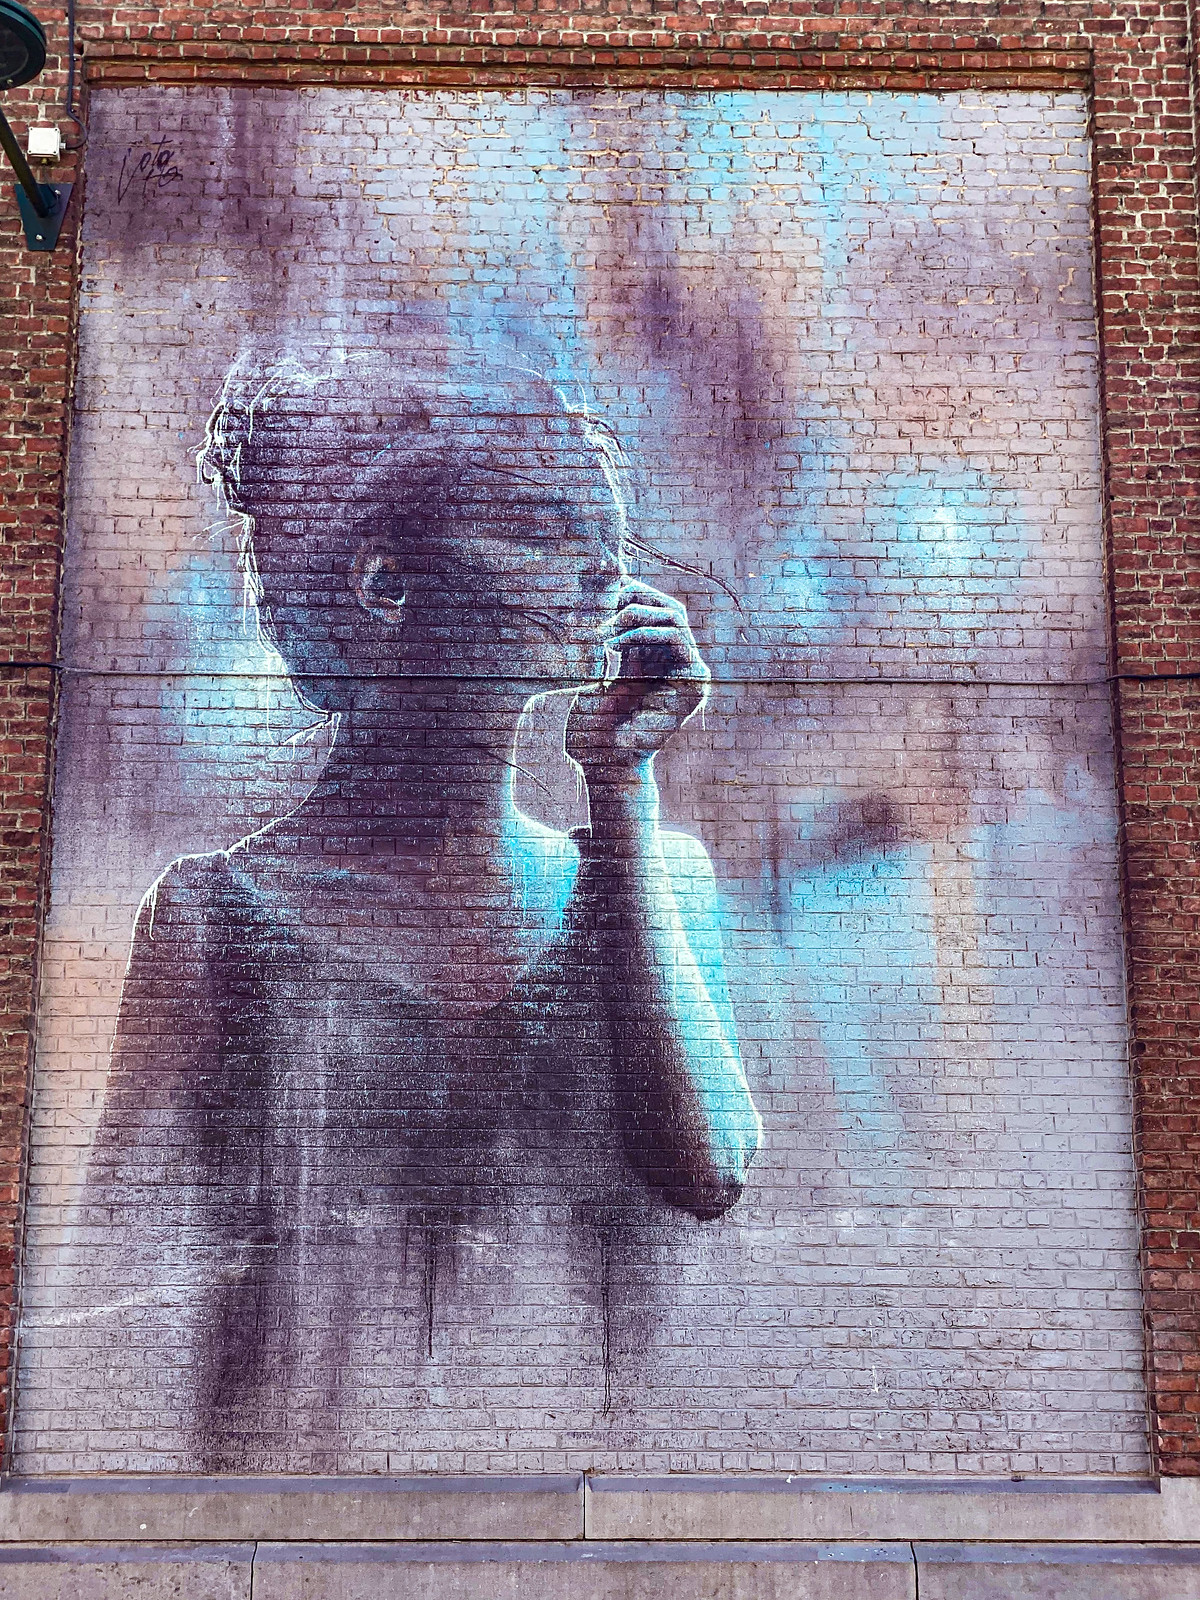 Street art mural by Dzia